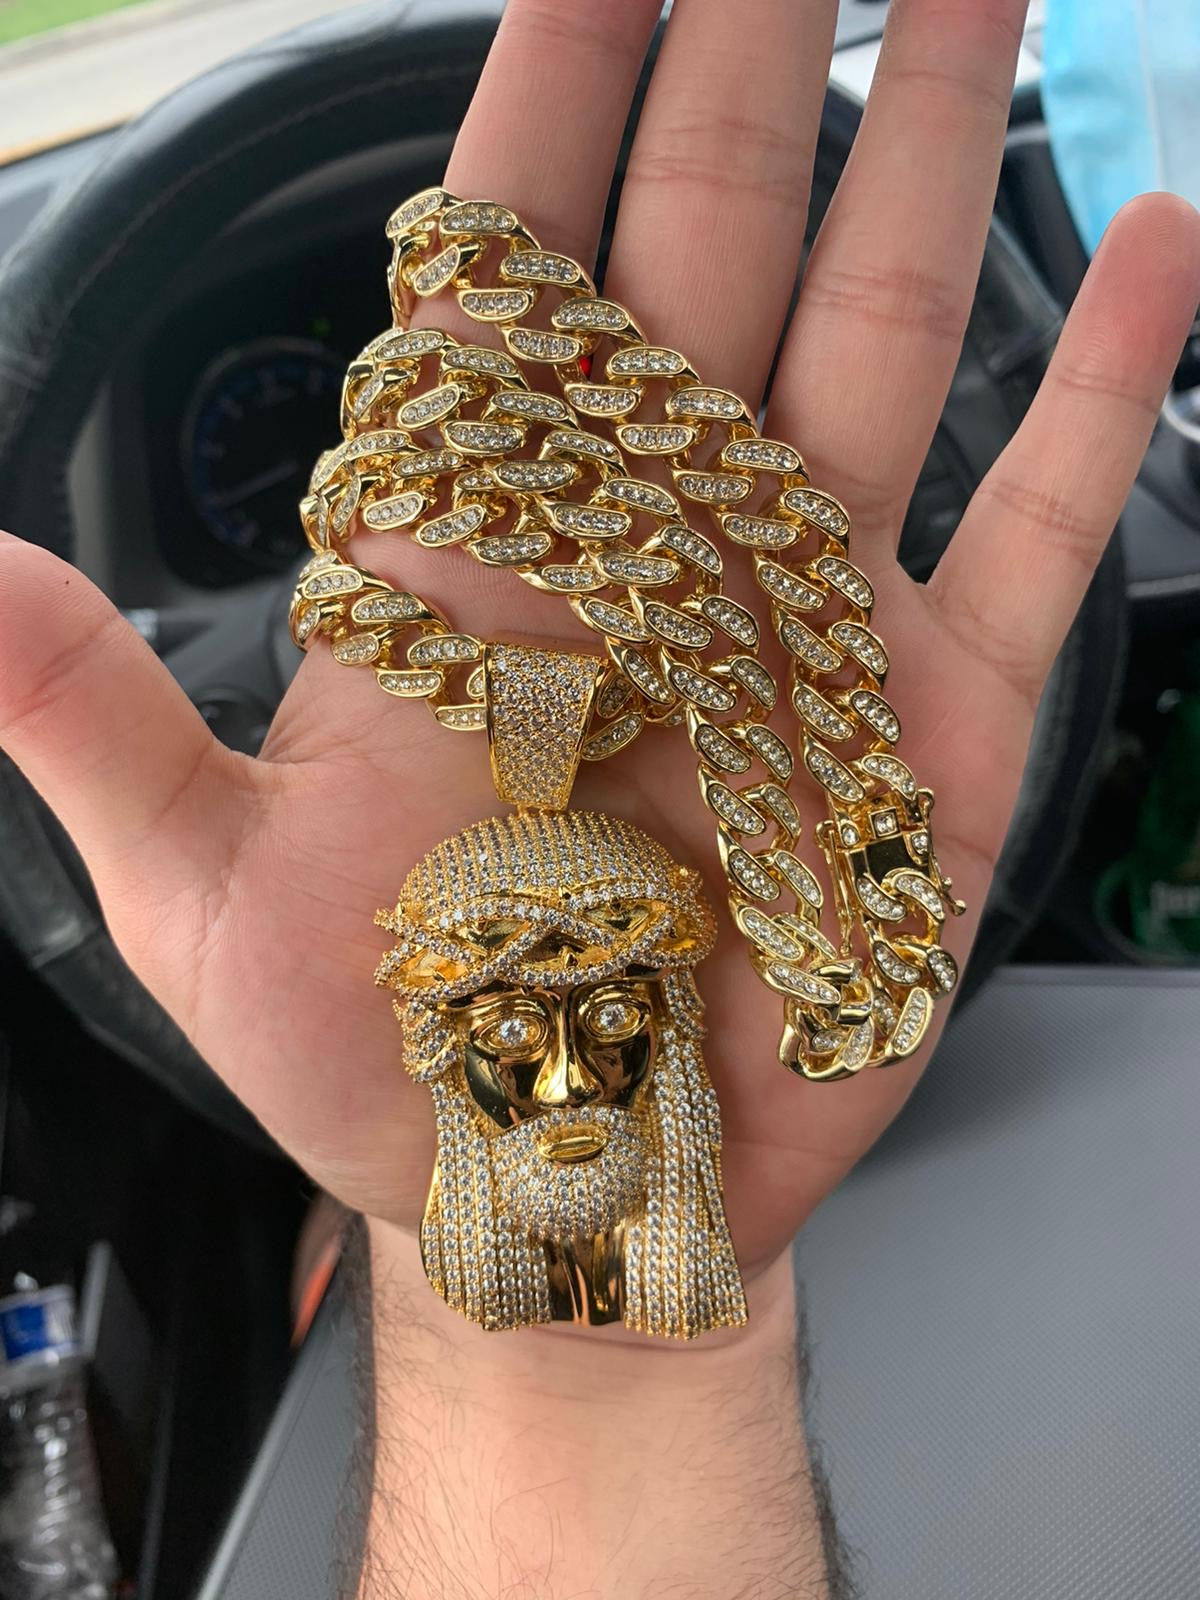 Jesus piece chain & pendant